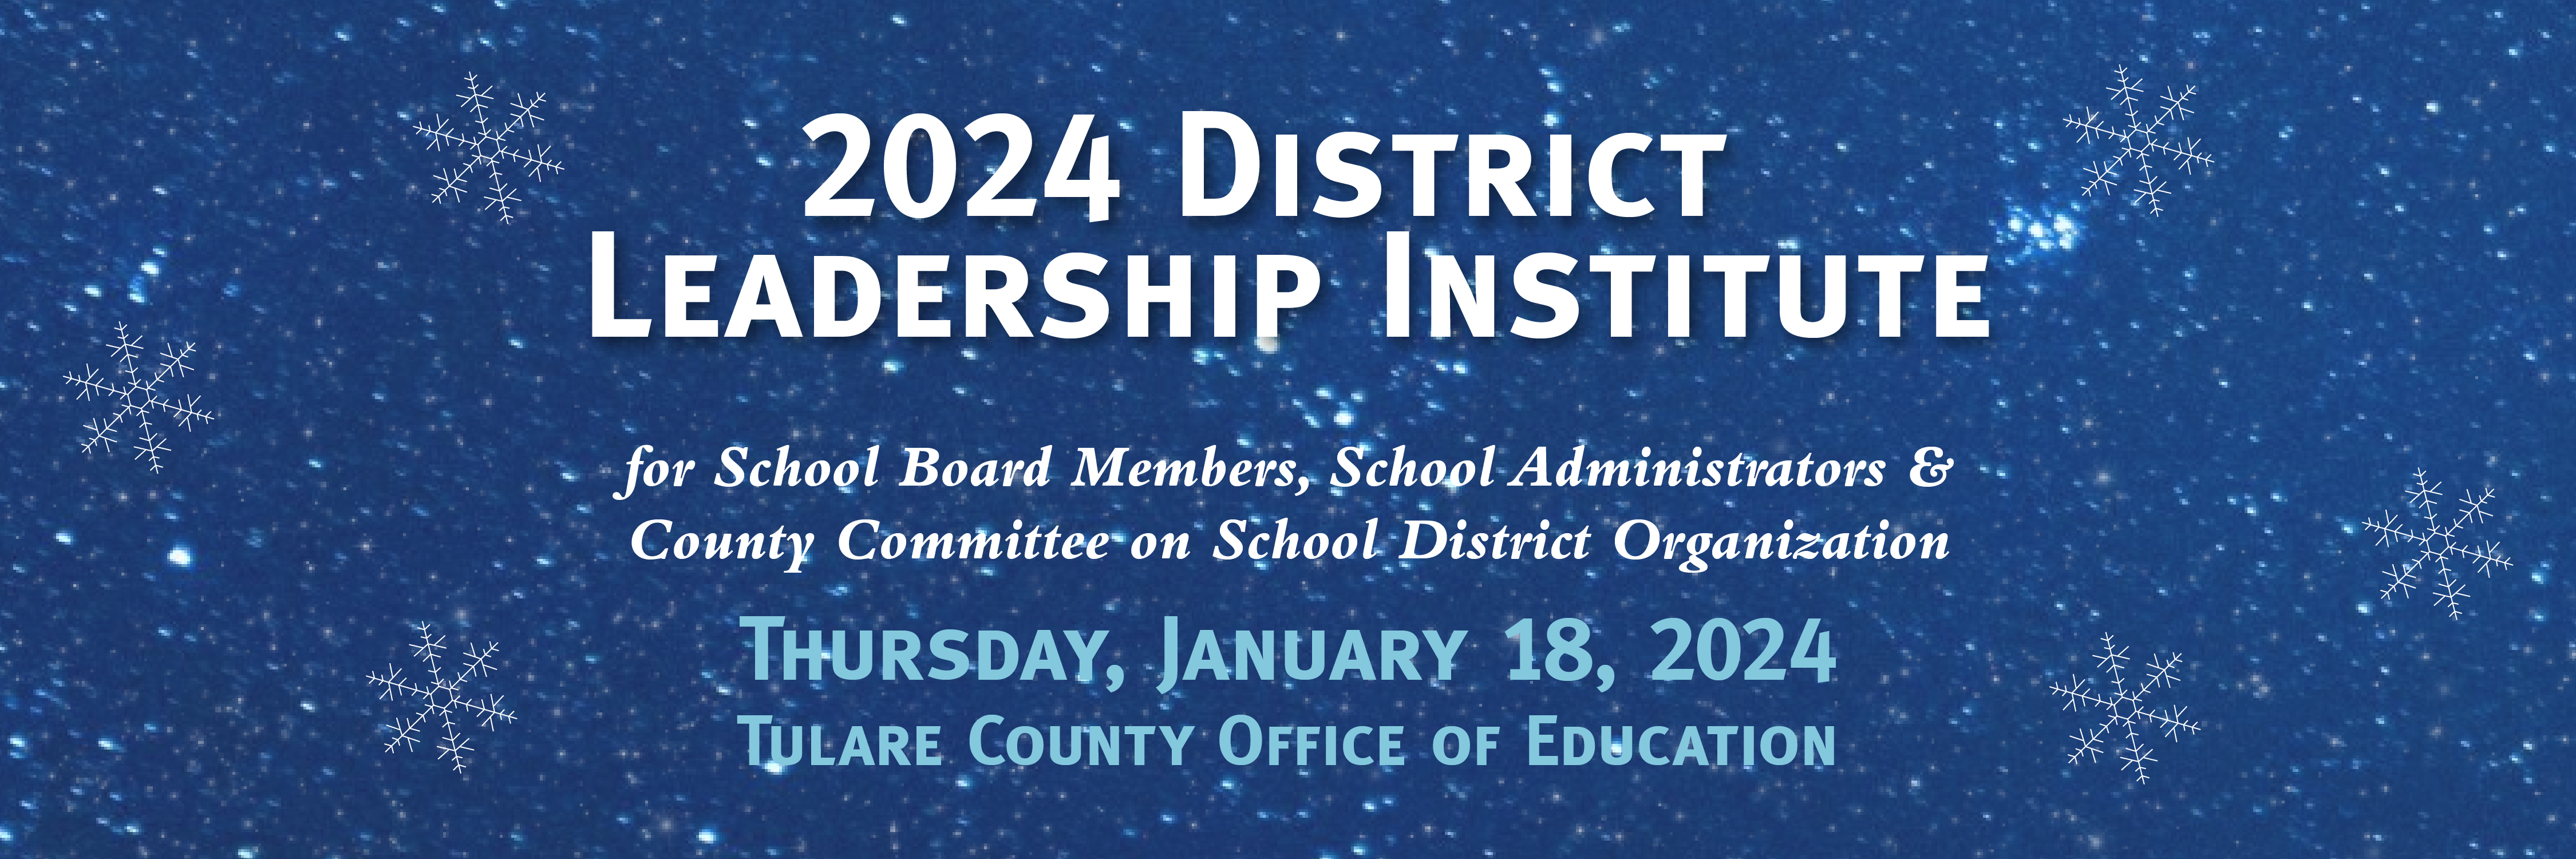 District Leadership Institute January 18, 2024